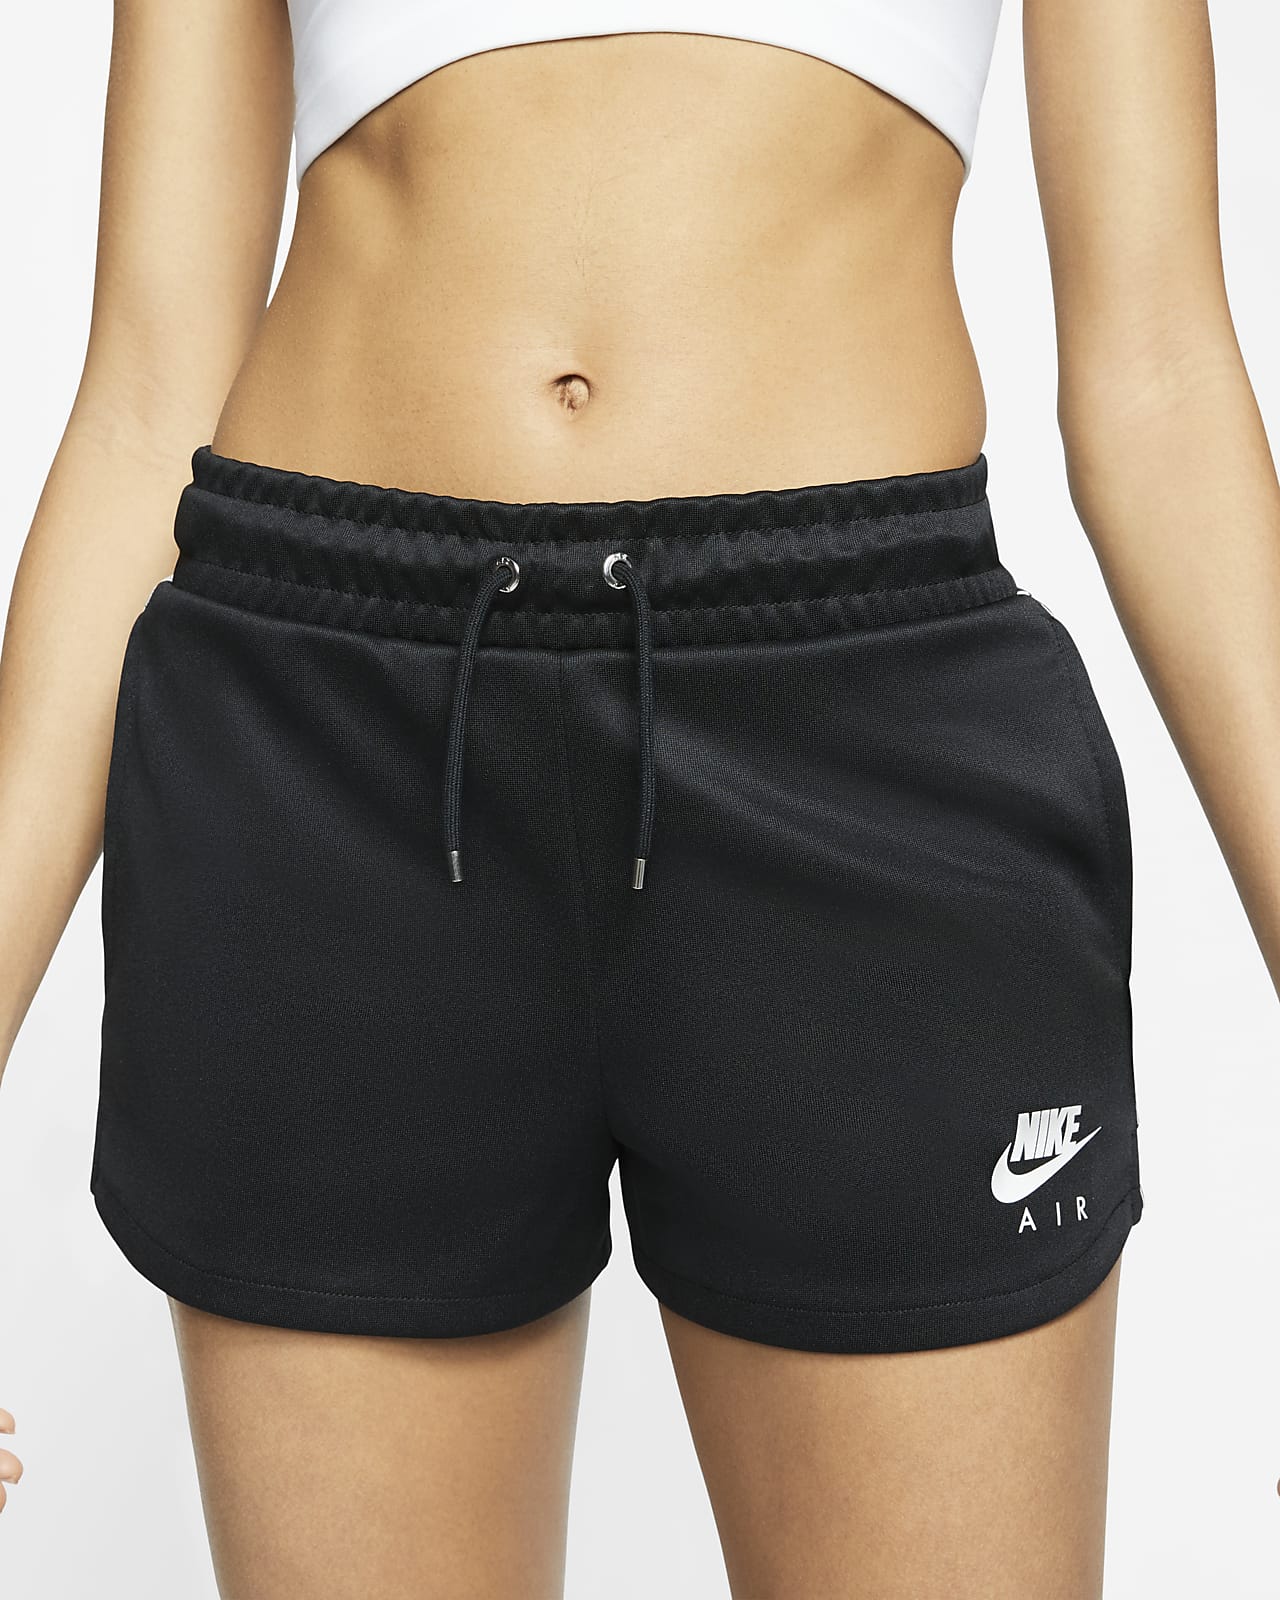 Nike Air Women's Shorts. Nike AU